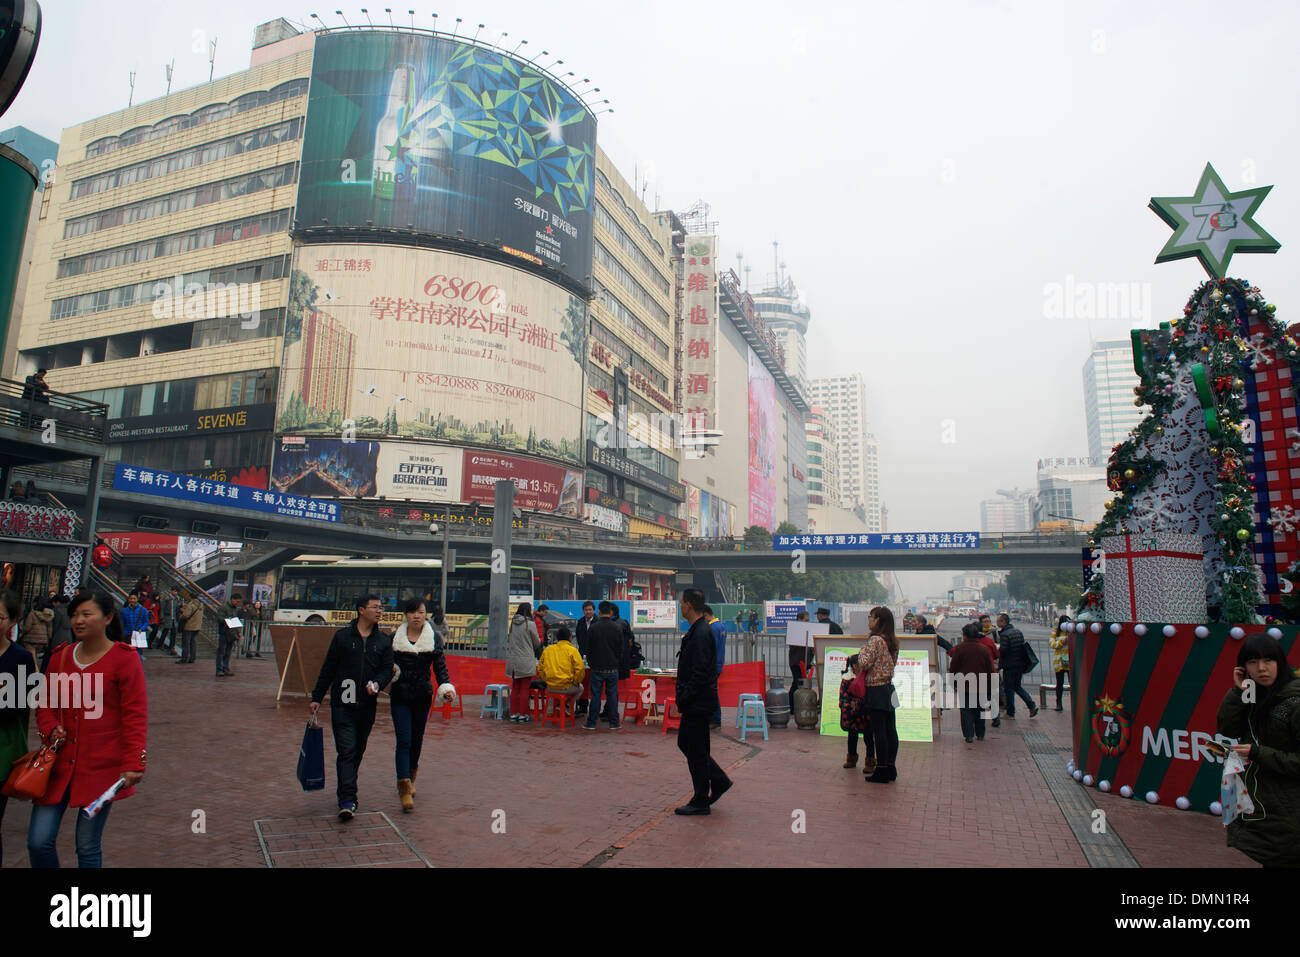 General scene of downtown Changsha, Hunan province, China. 2013 Stock Photo